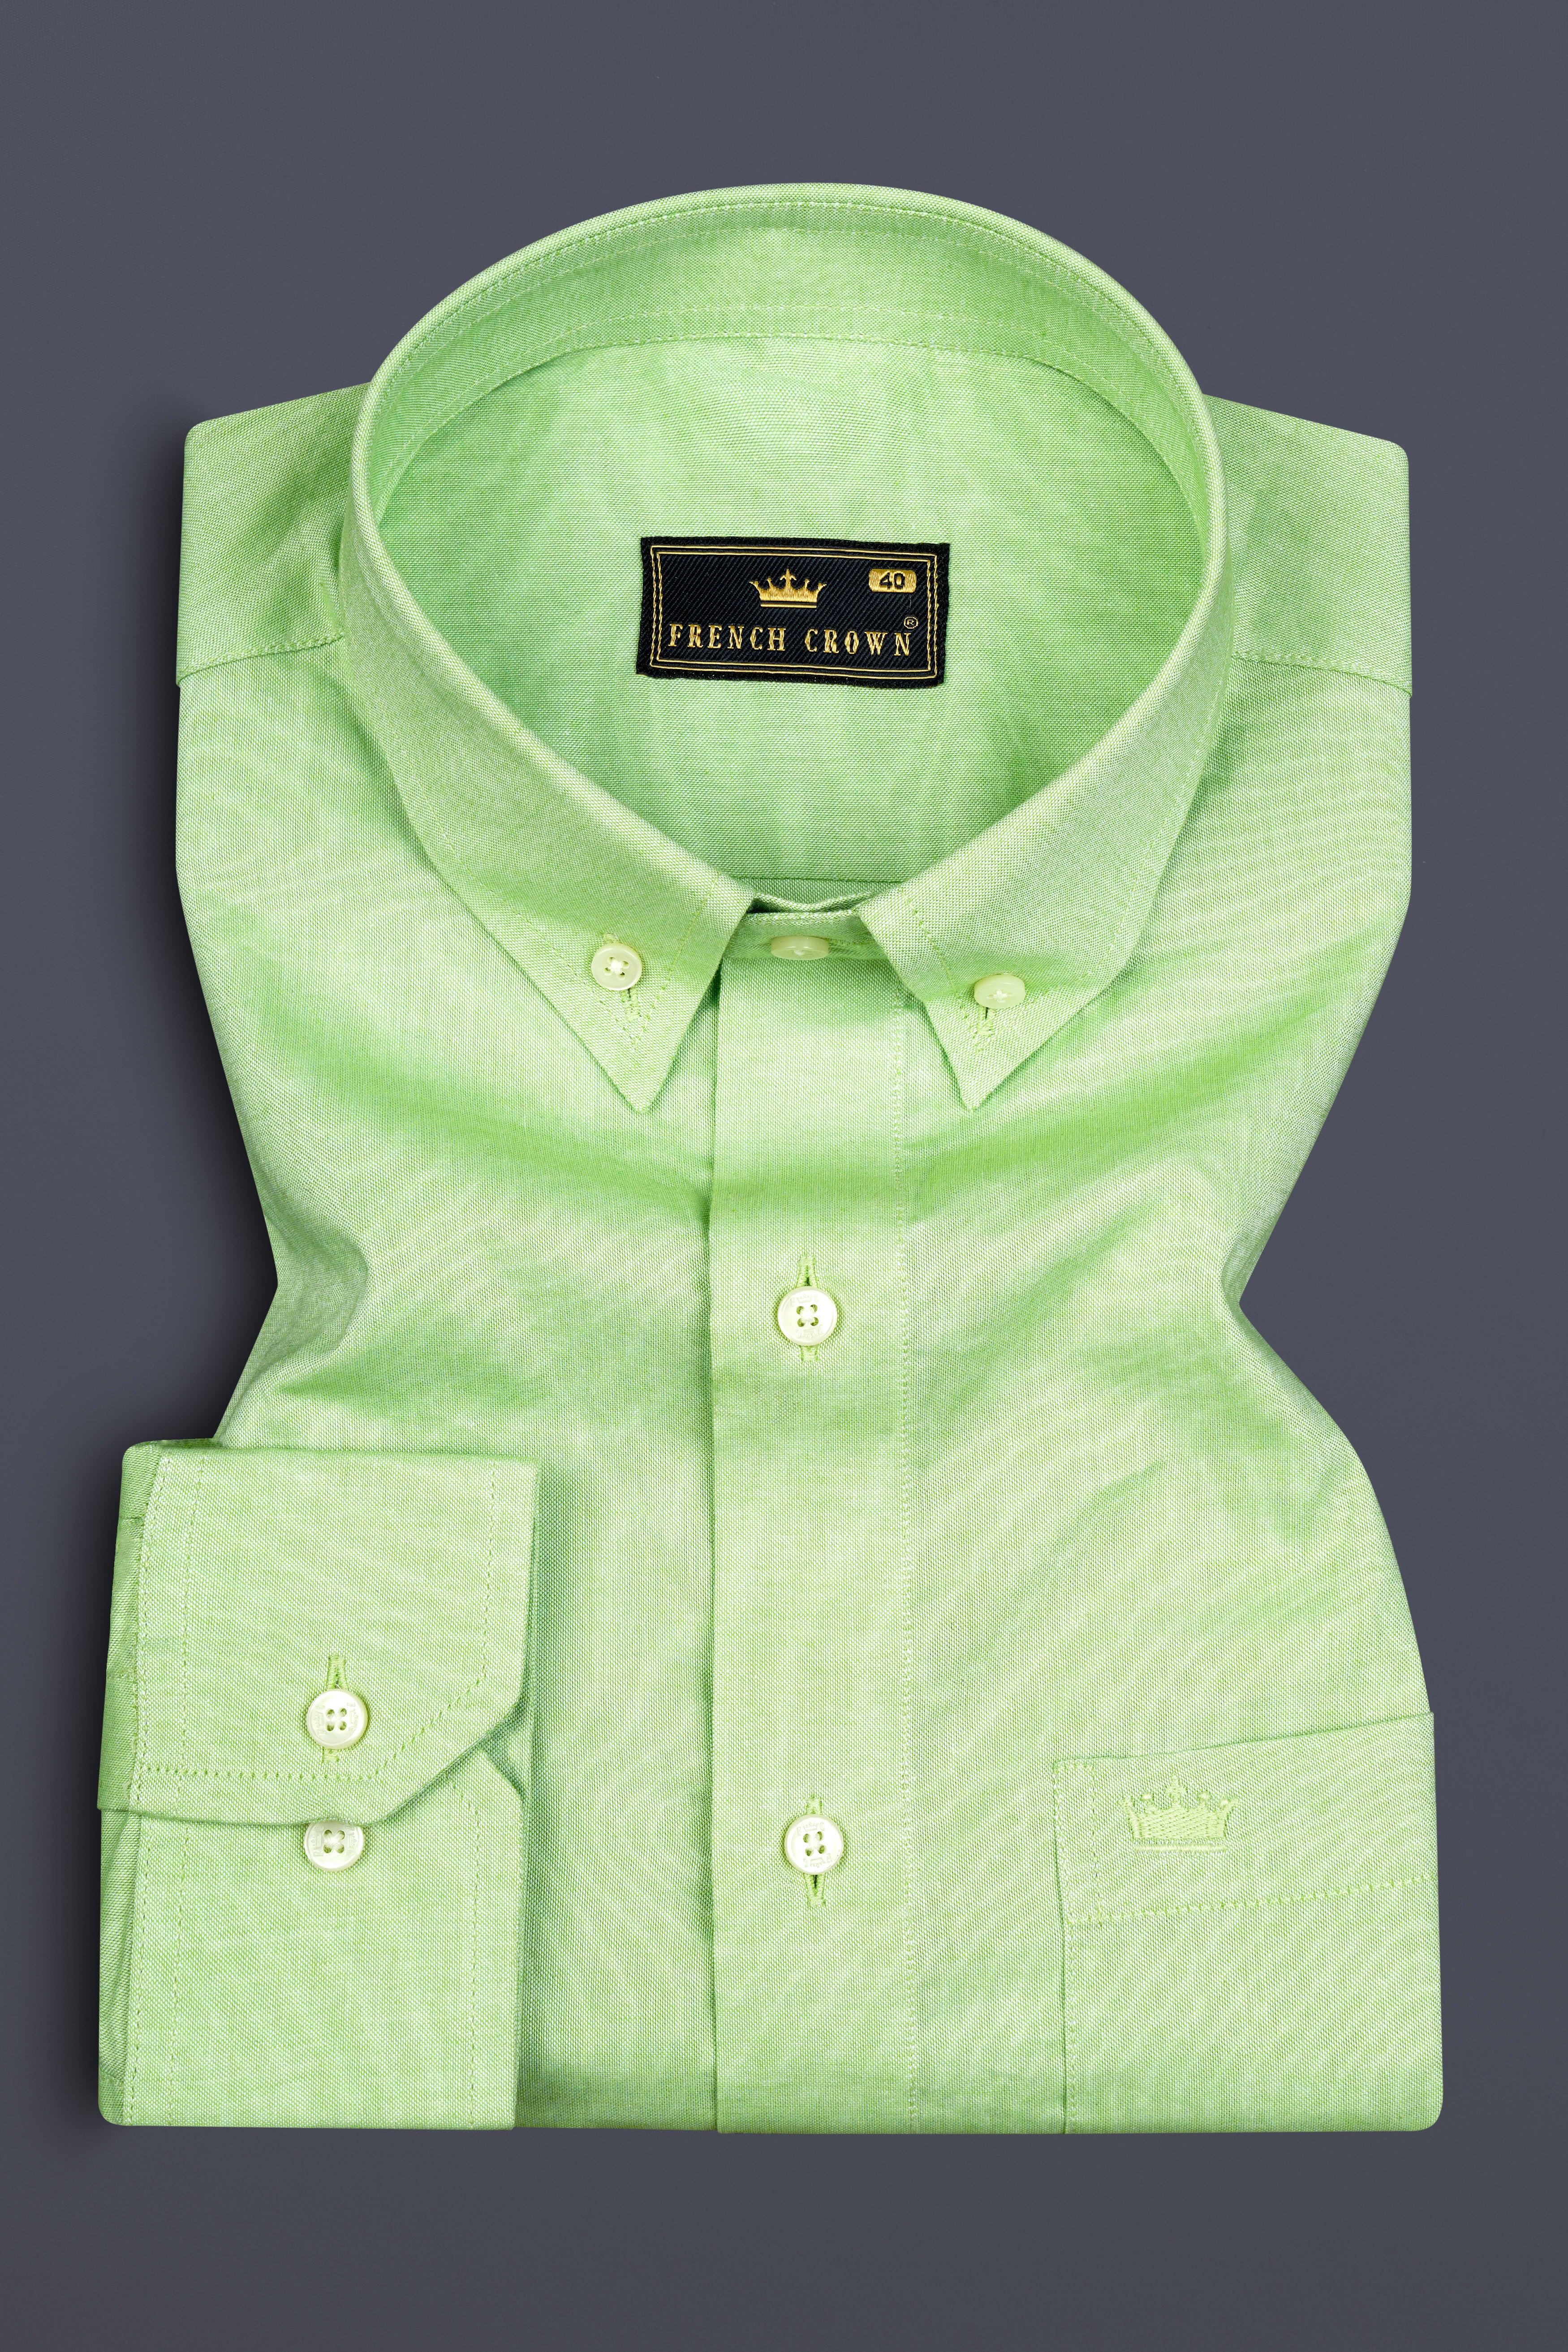 Washed Out Green Royal Oxford Shirt